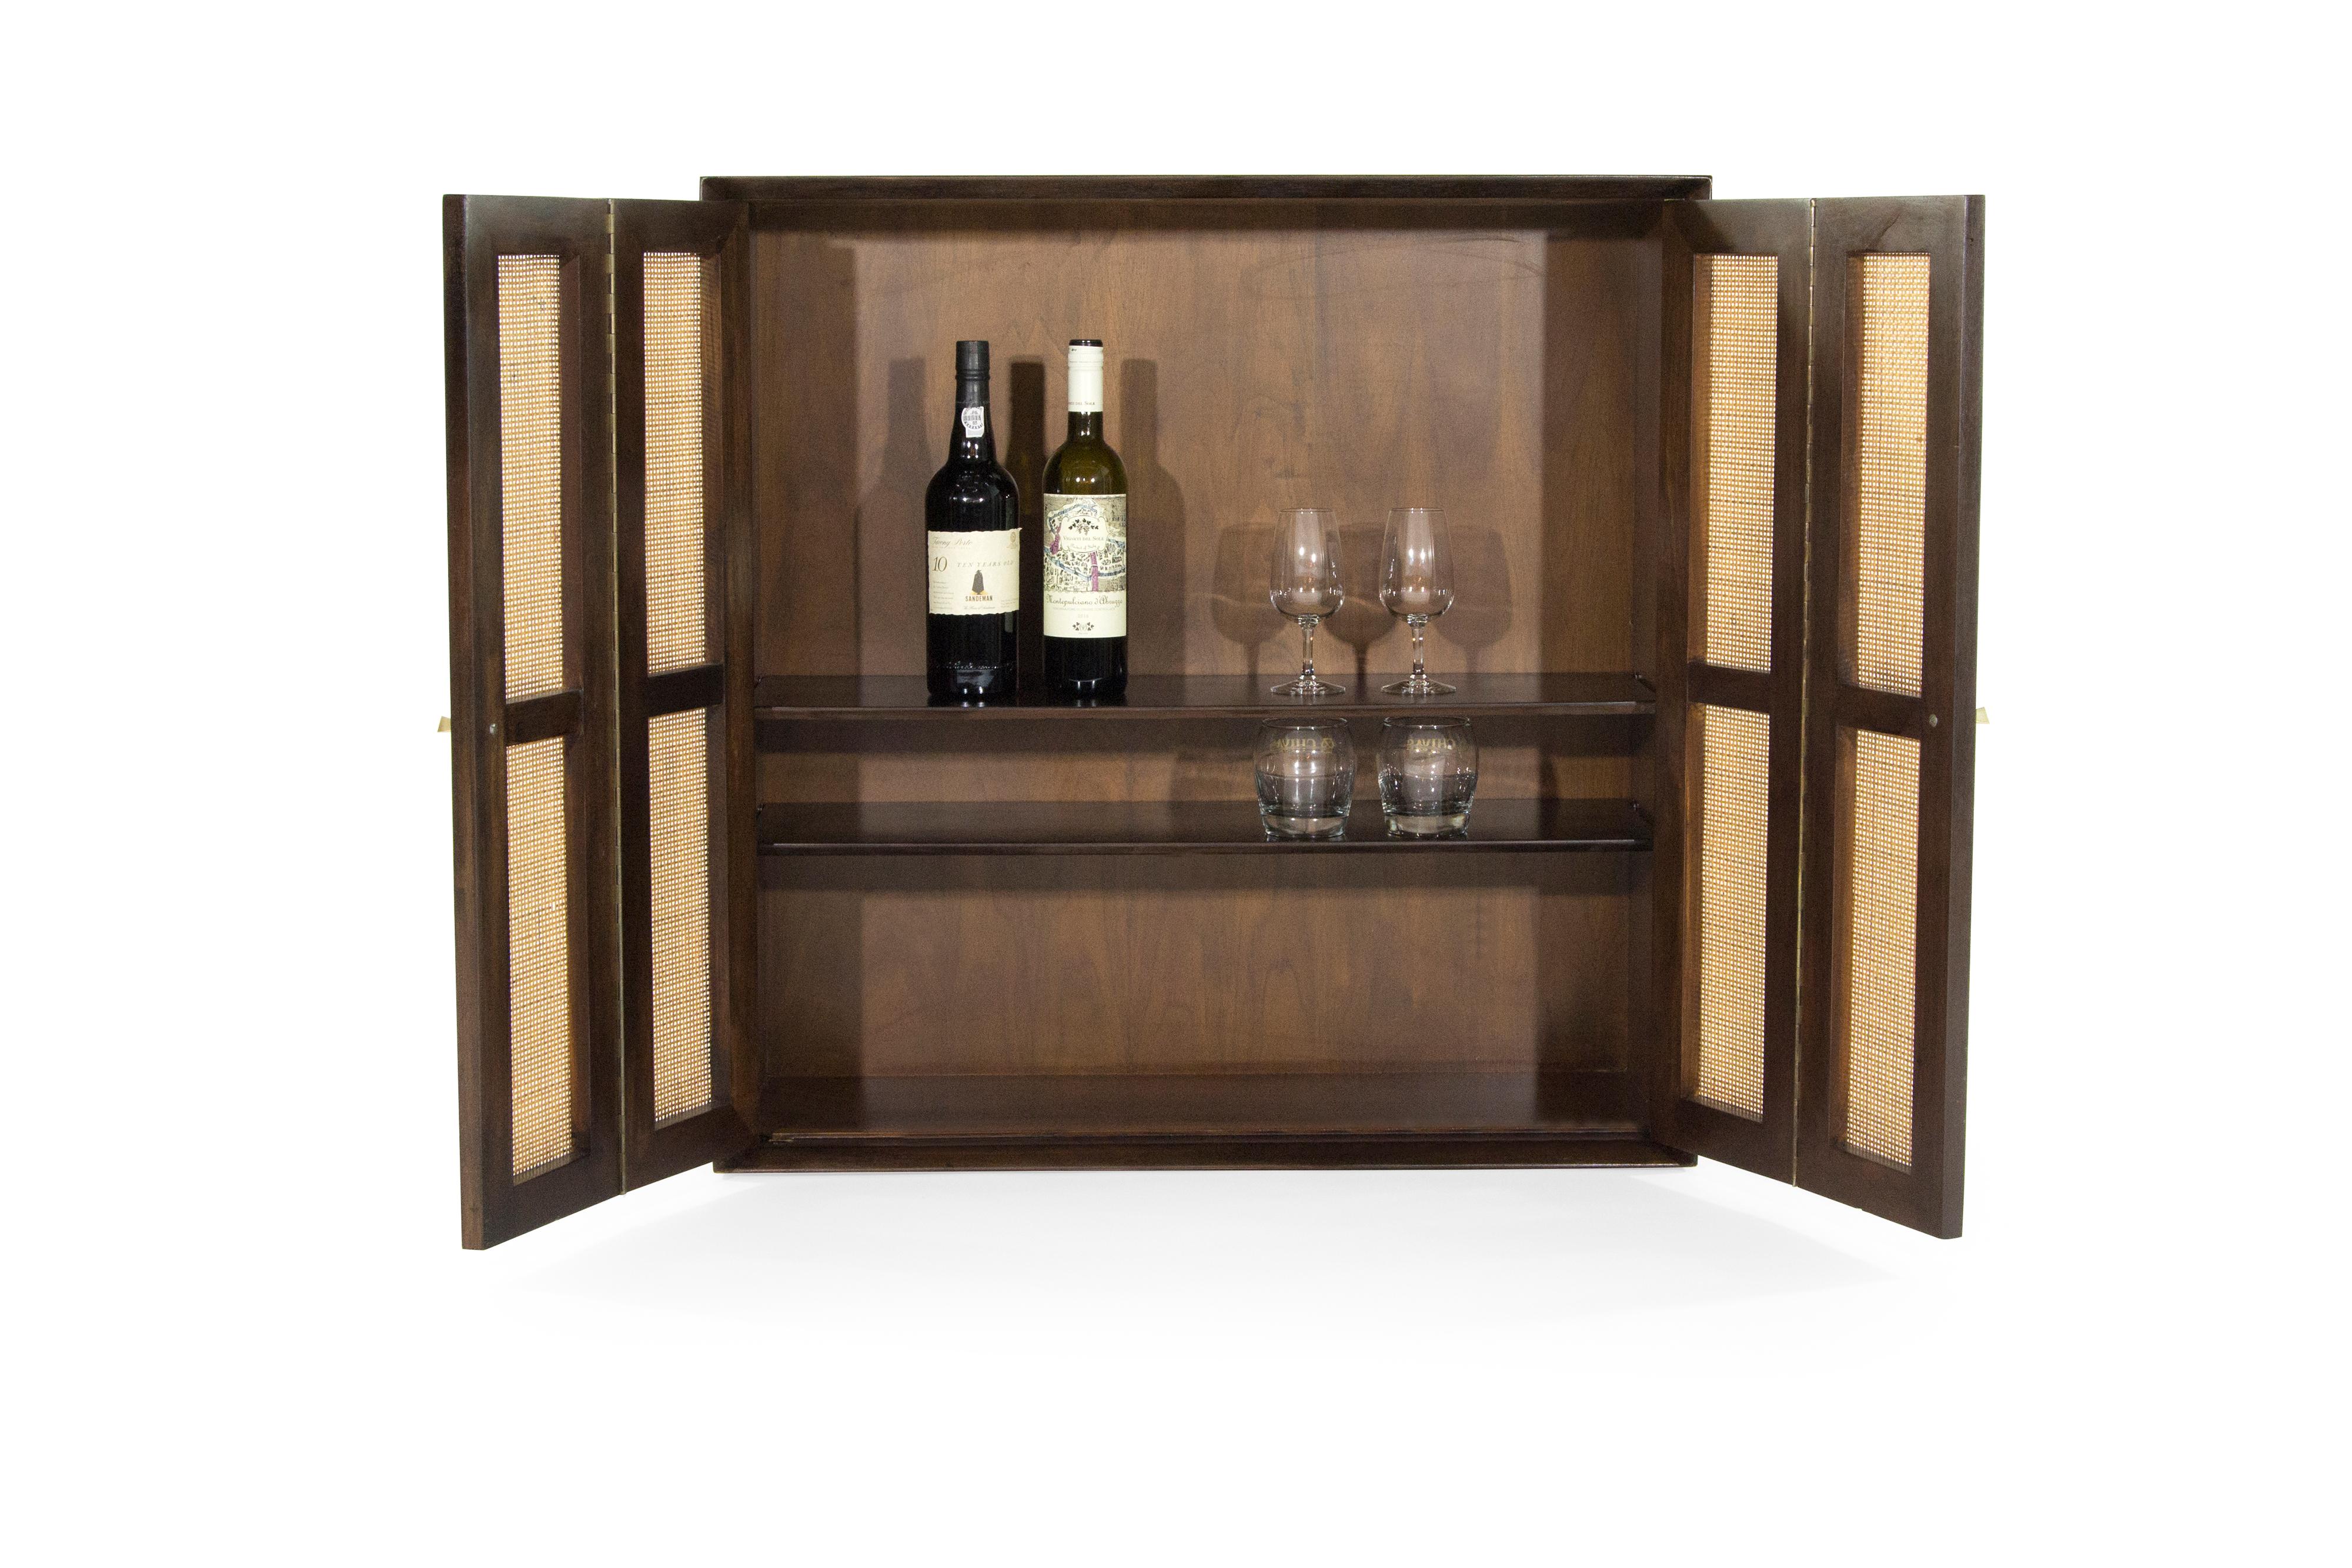 American Floating Liquor Cabinet by Vladimir Kagan for Grosfeld House